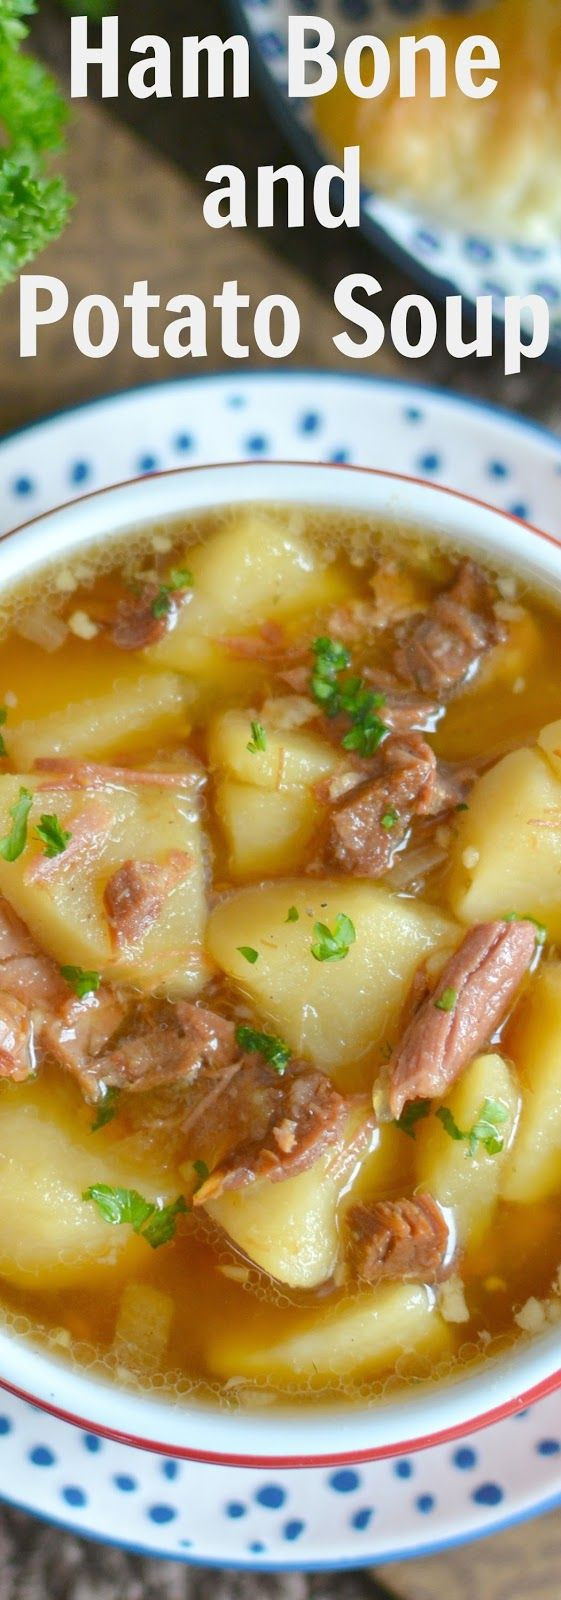 Ham Bone Potato Soup Slow Cooker
 Stovetop or Slow Cooker Ham Bone and Potato Soup Recipe